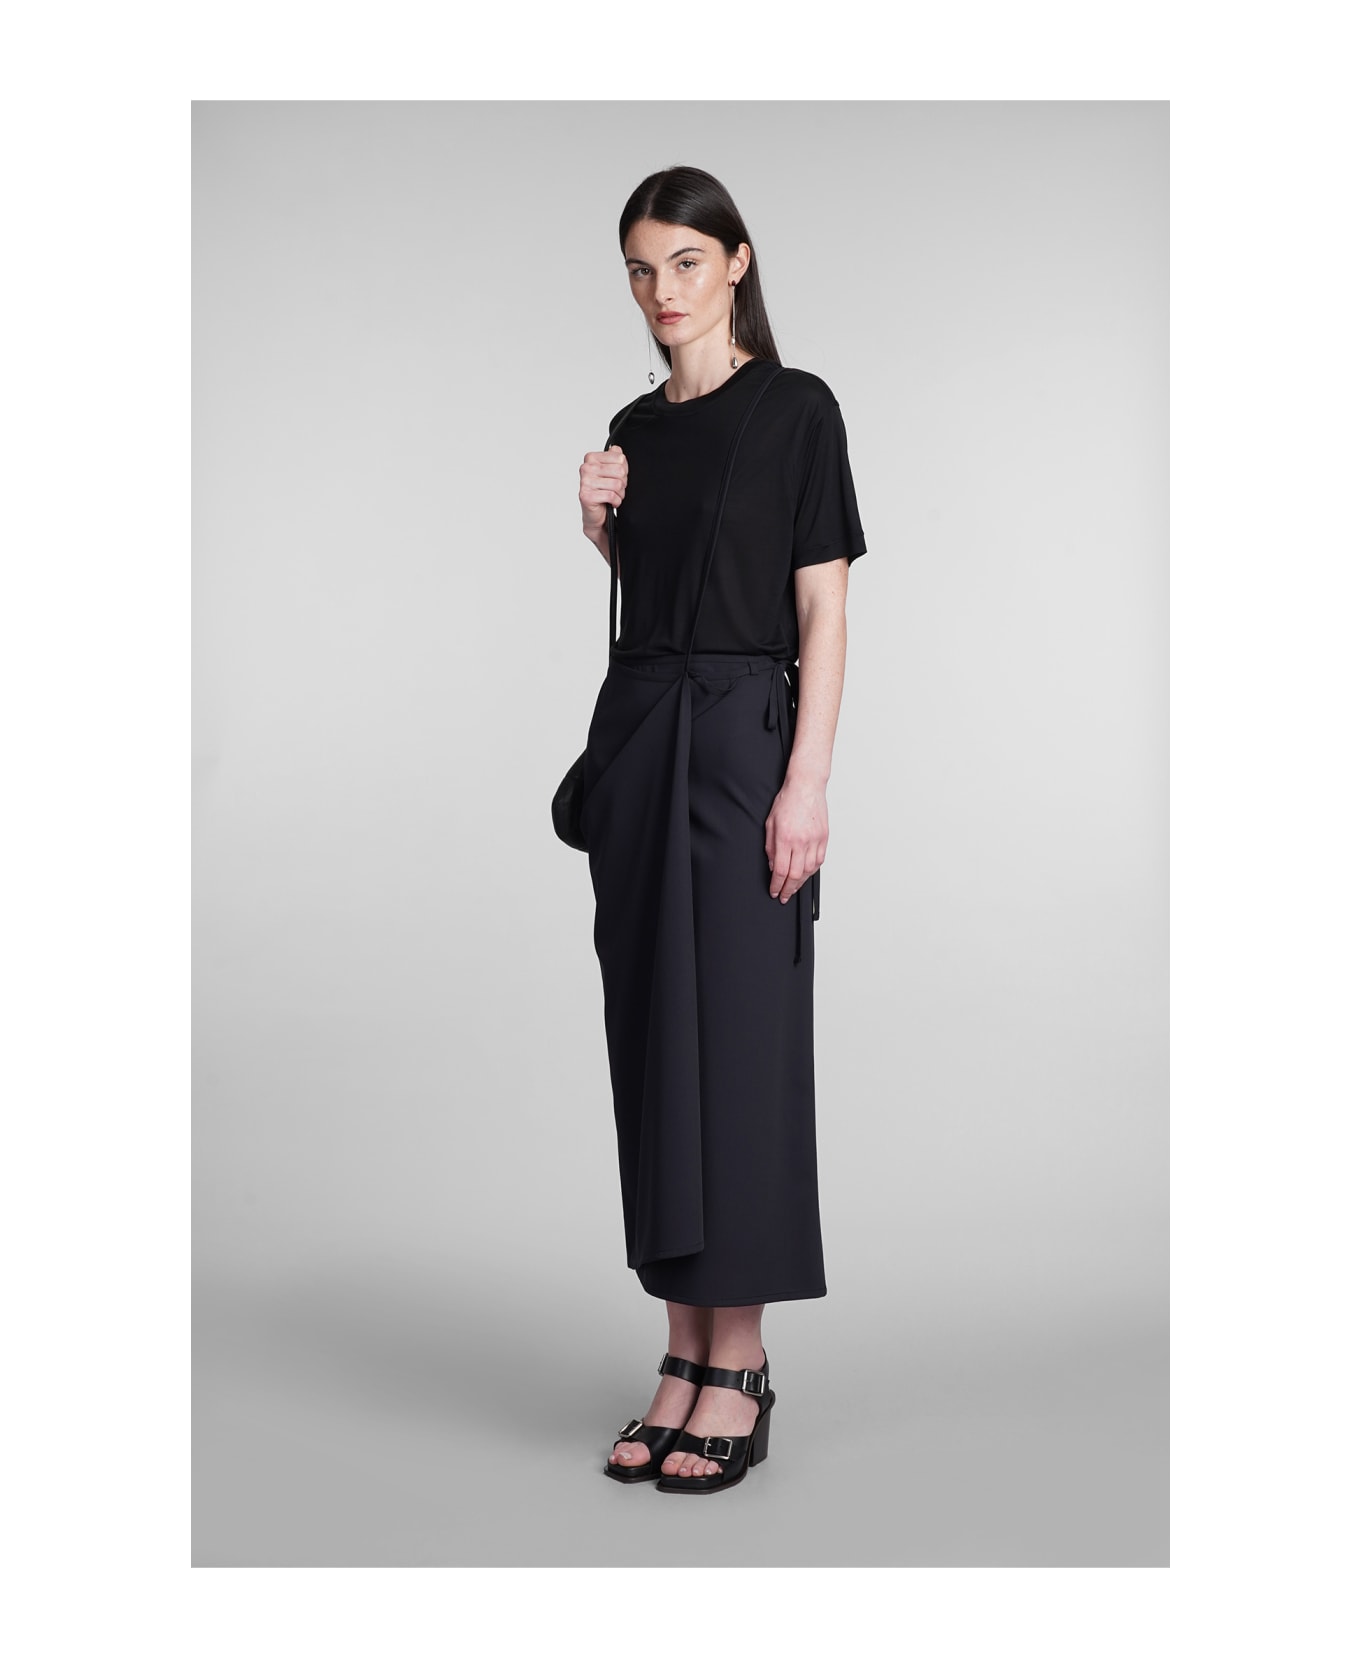 Lemaire Skirt In Black Wool - BLACK